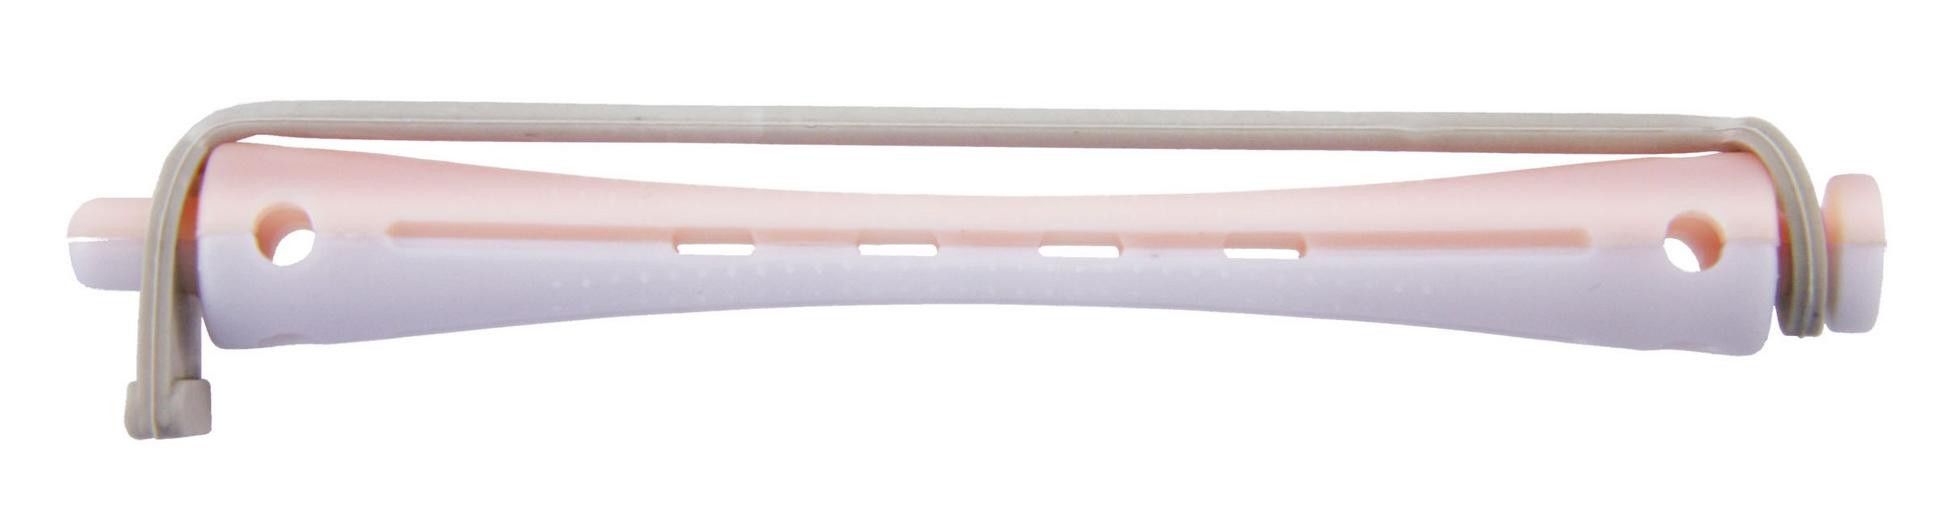 Comair Permanentwikkels lang wit/roze 7mm 12 stuks